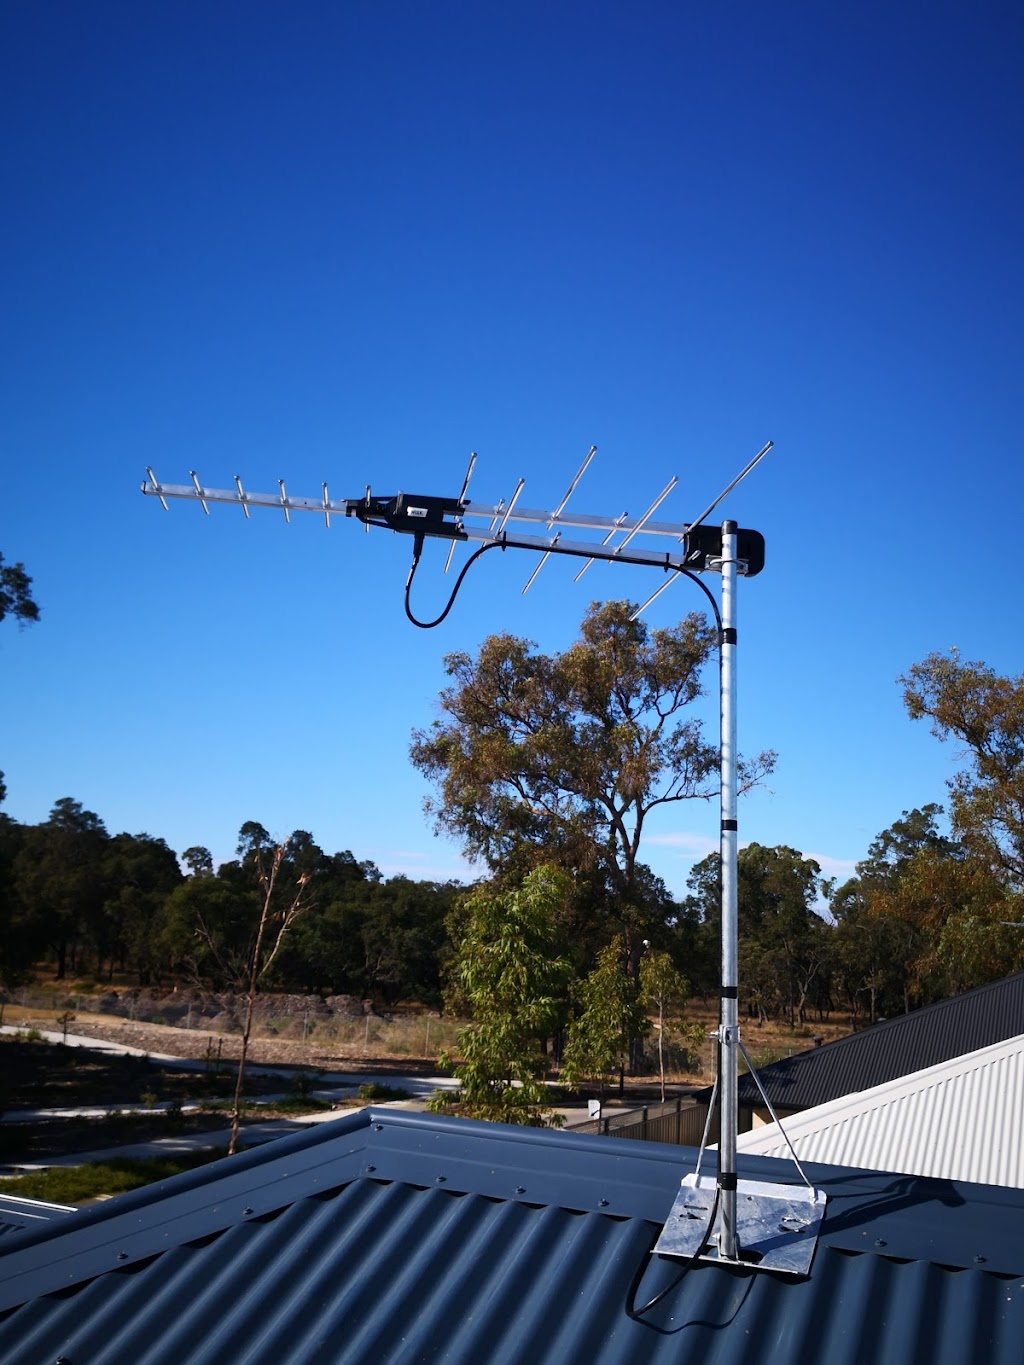 South Vision antennas | 21 Jollup Way, Ravenswood WA 6208, Australia | Phone: 0435 841 935